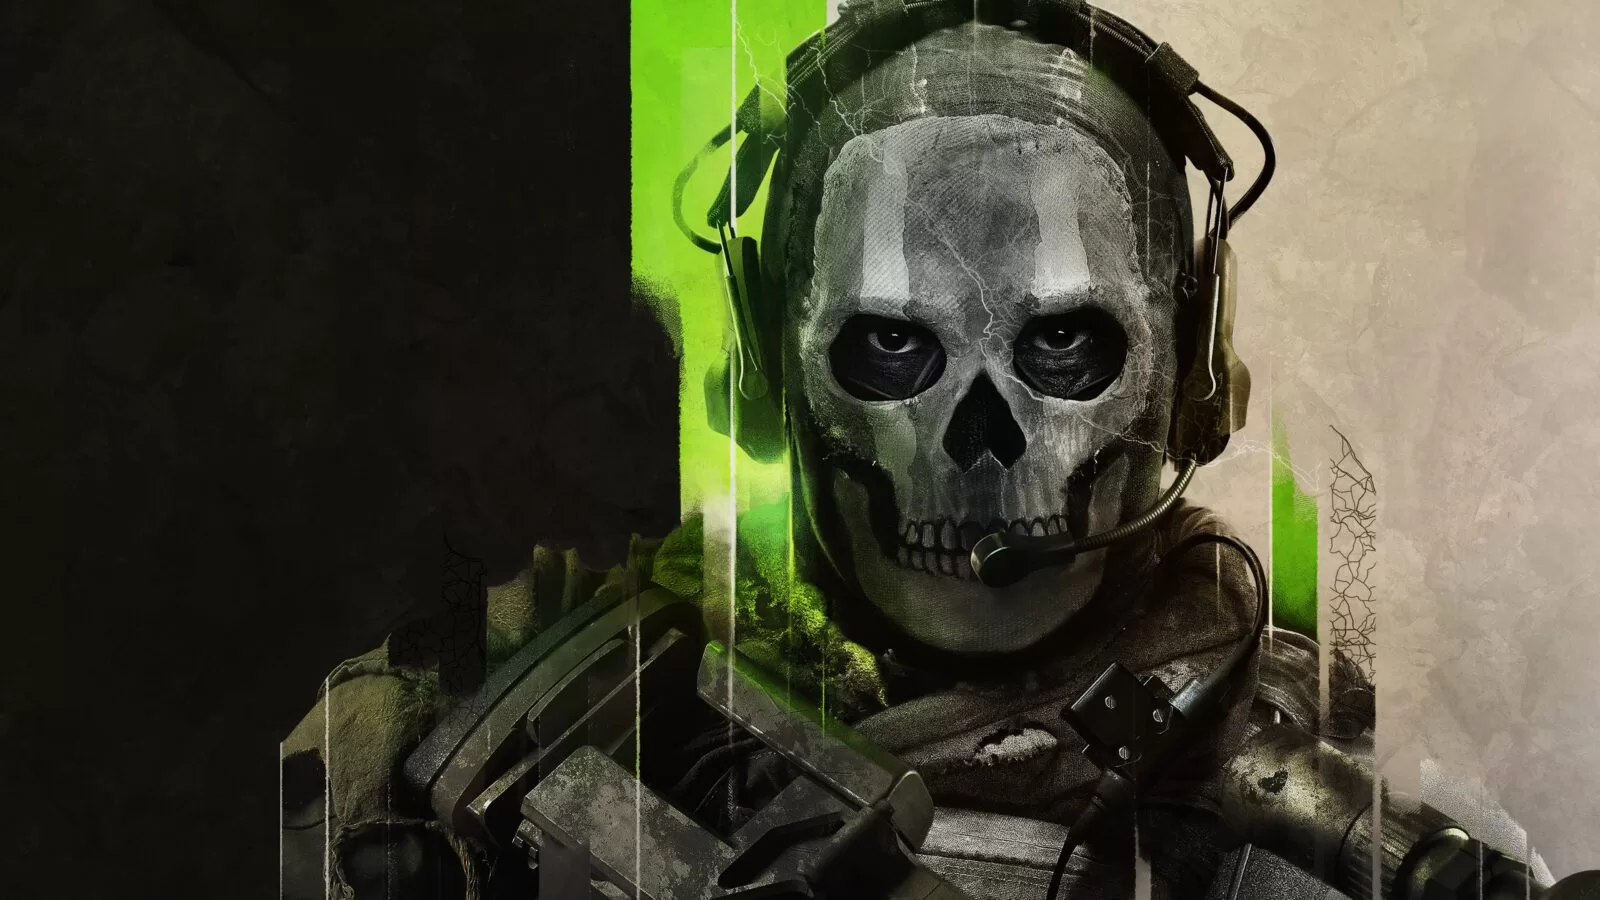 call of duty modern warfare 2 2022 key art | Call of Duty | เดือดสุดๆ เผยเกมเพลย์ใหม่ Call of Duty: Modern Warfare 2 โหมดผู้เล่นหลายคน